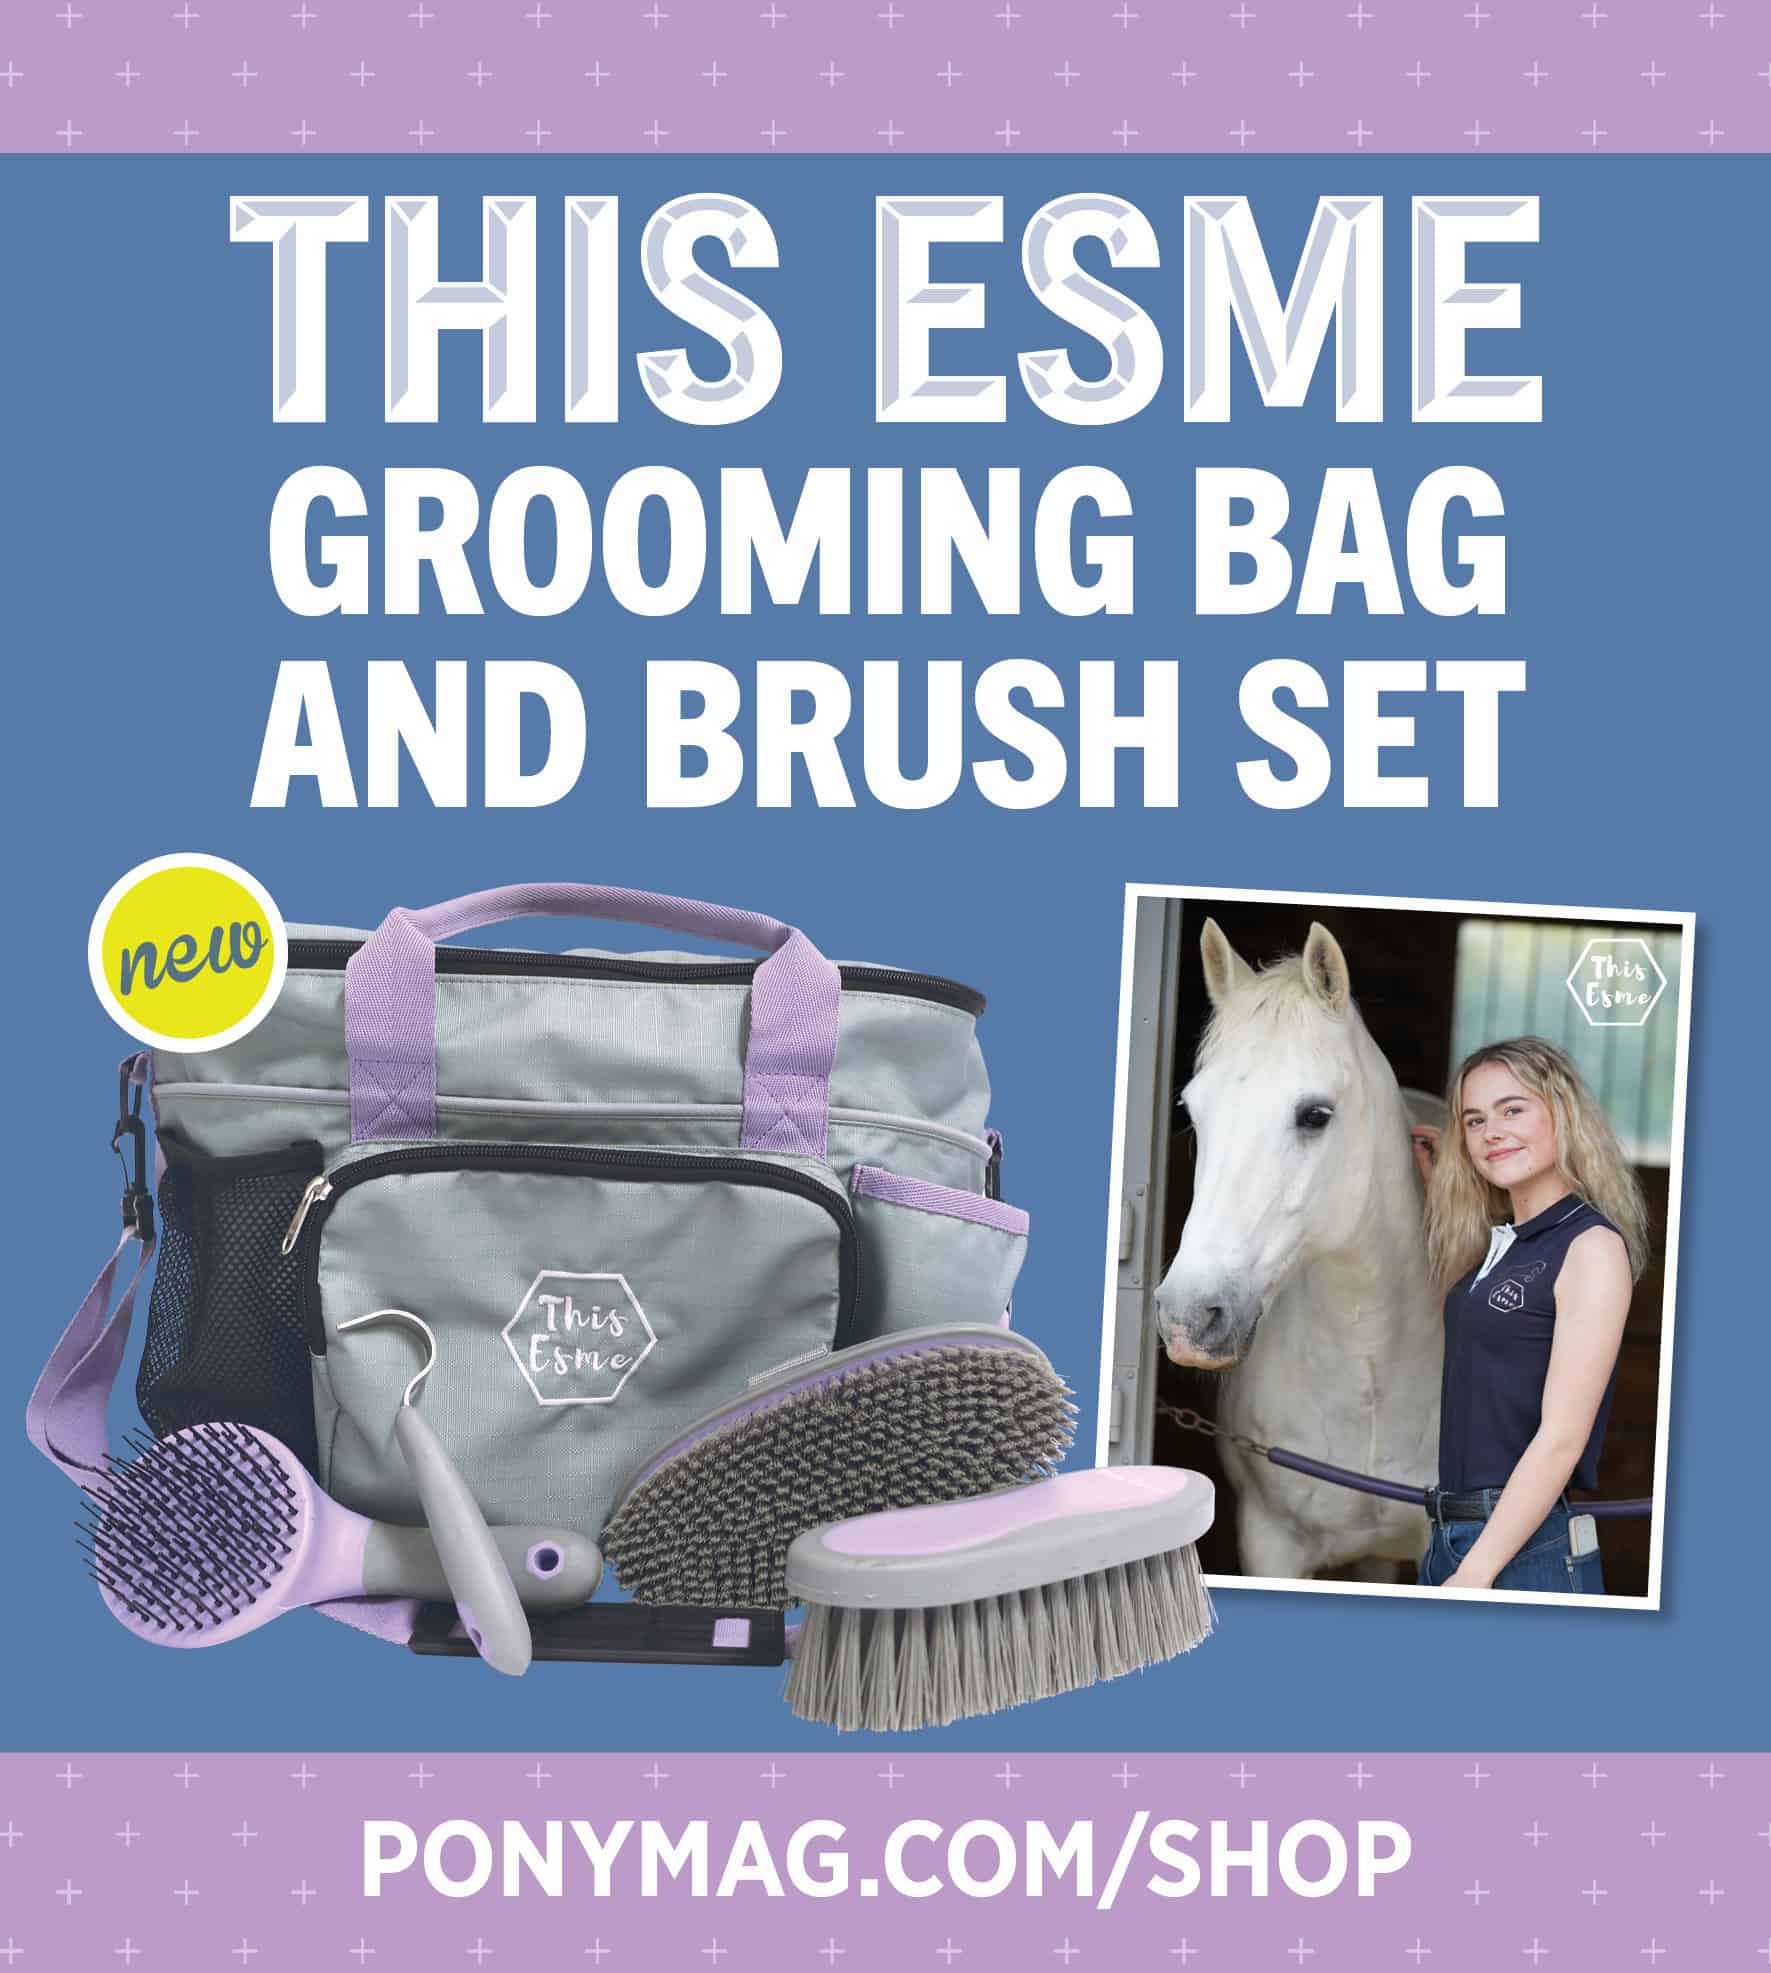 This Esme grooming bag and brush set